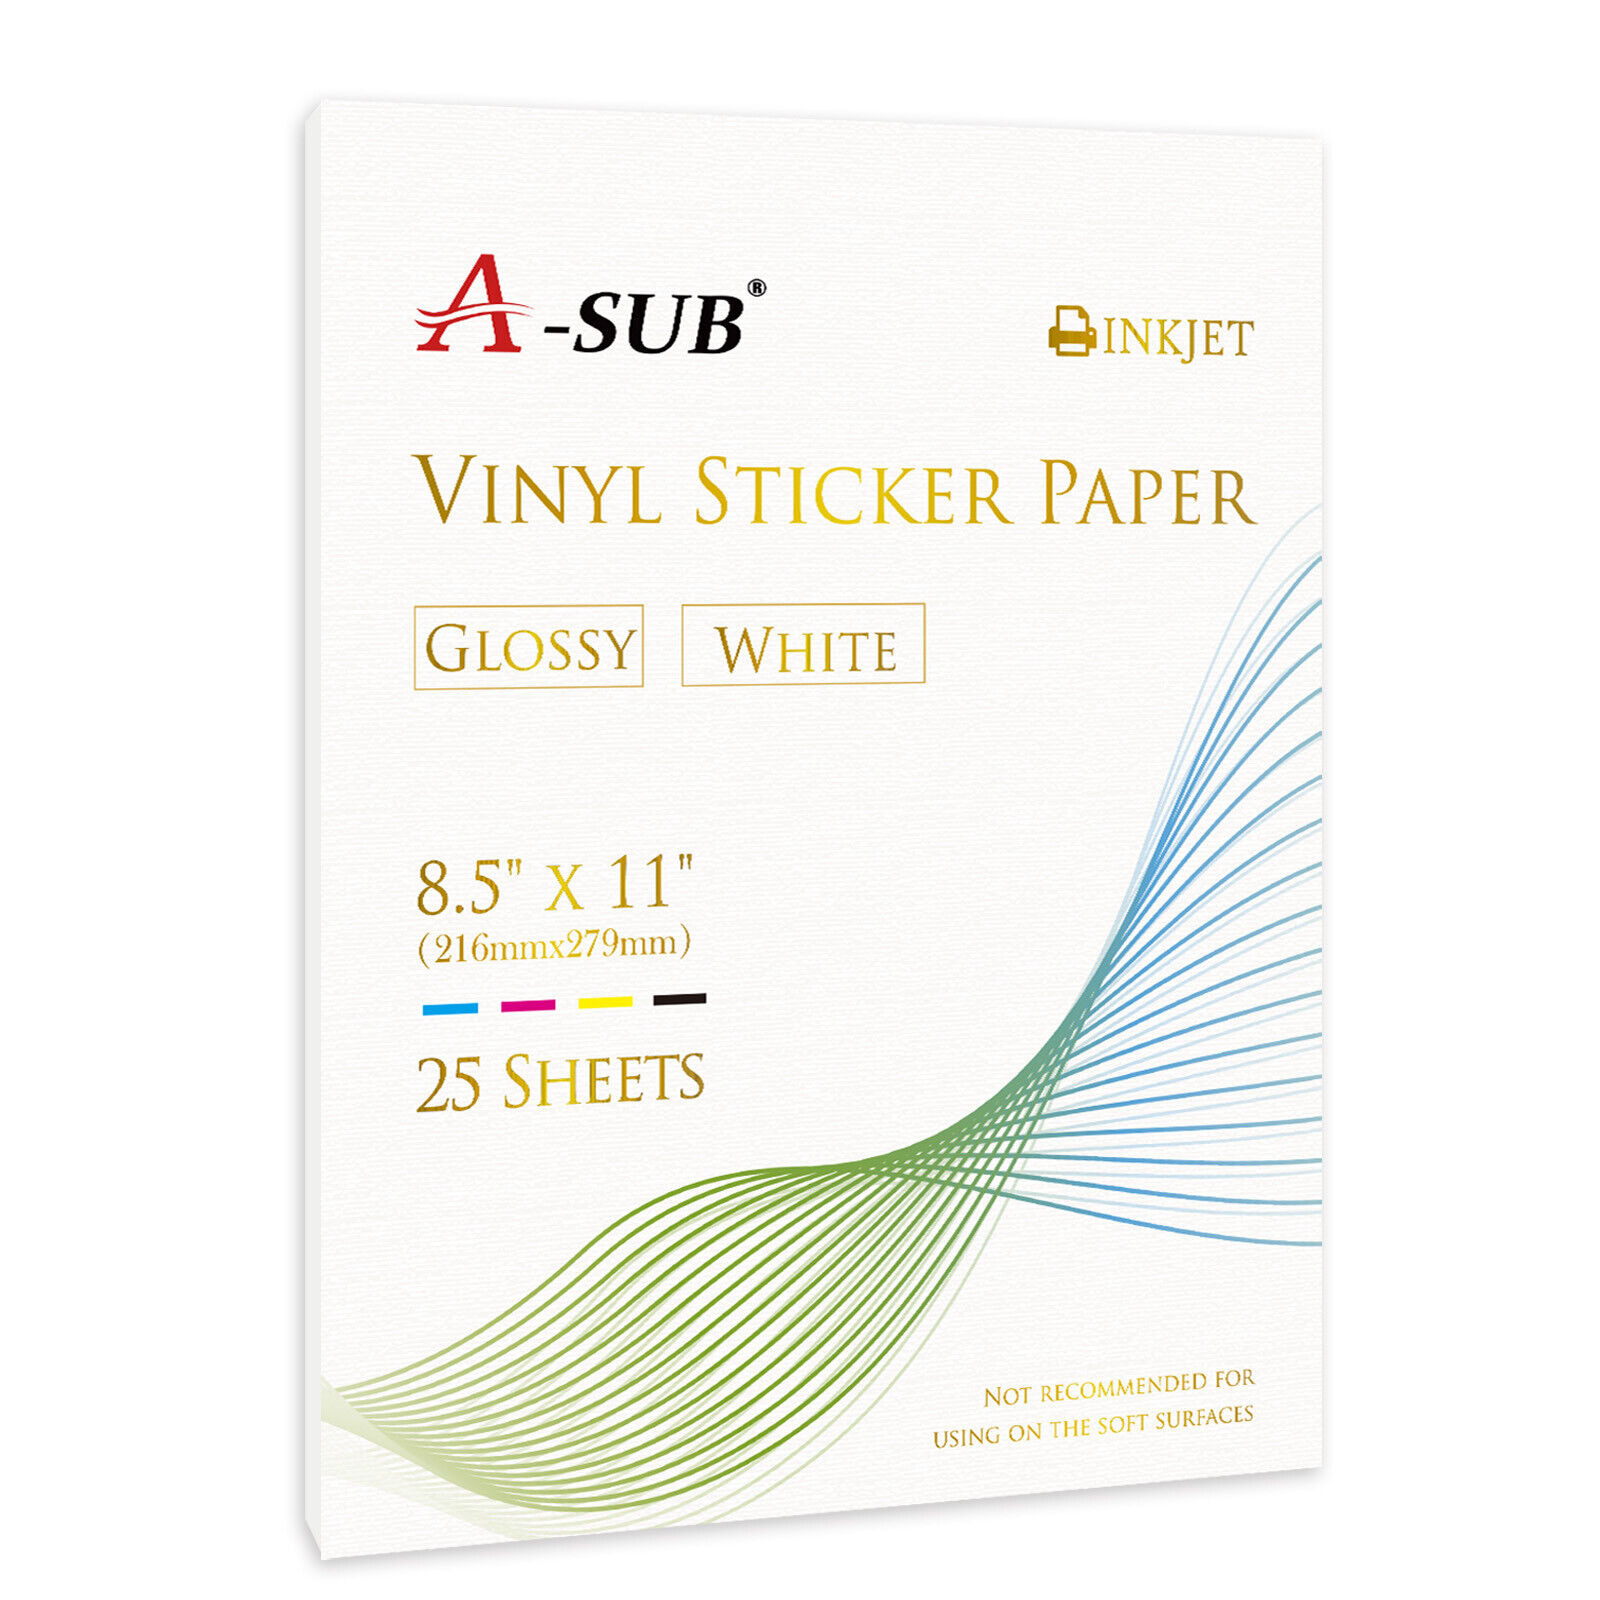 Lot 15-100 A-SUB Printable Vinyl Sticker Paper Clear / Glossy White Inkjet Laser